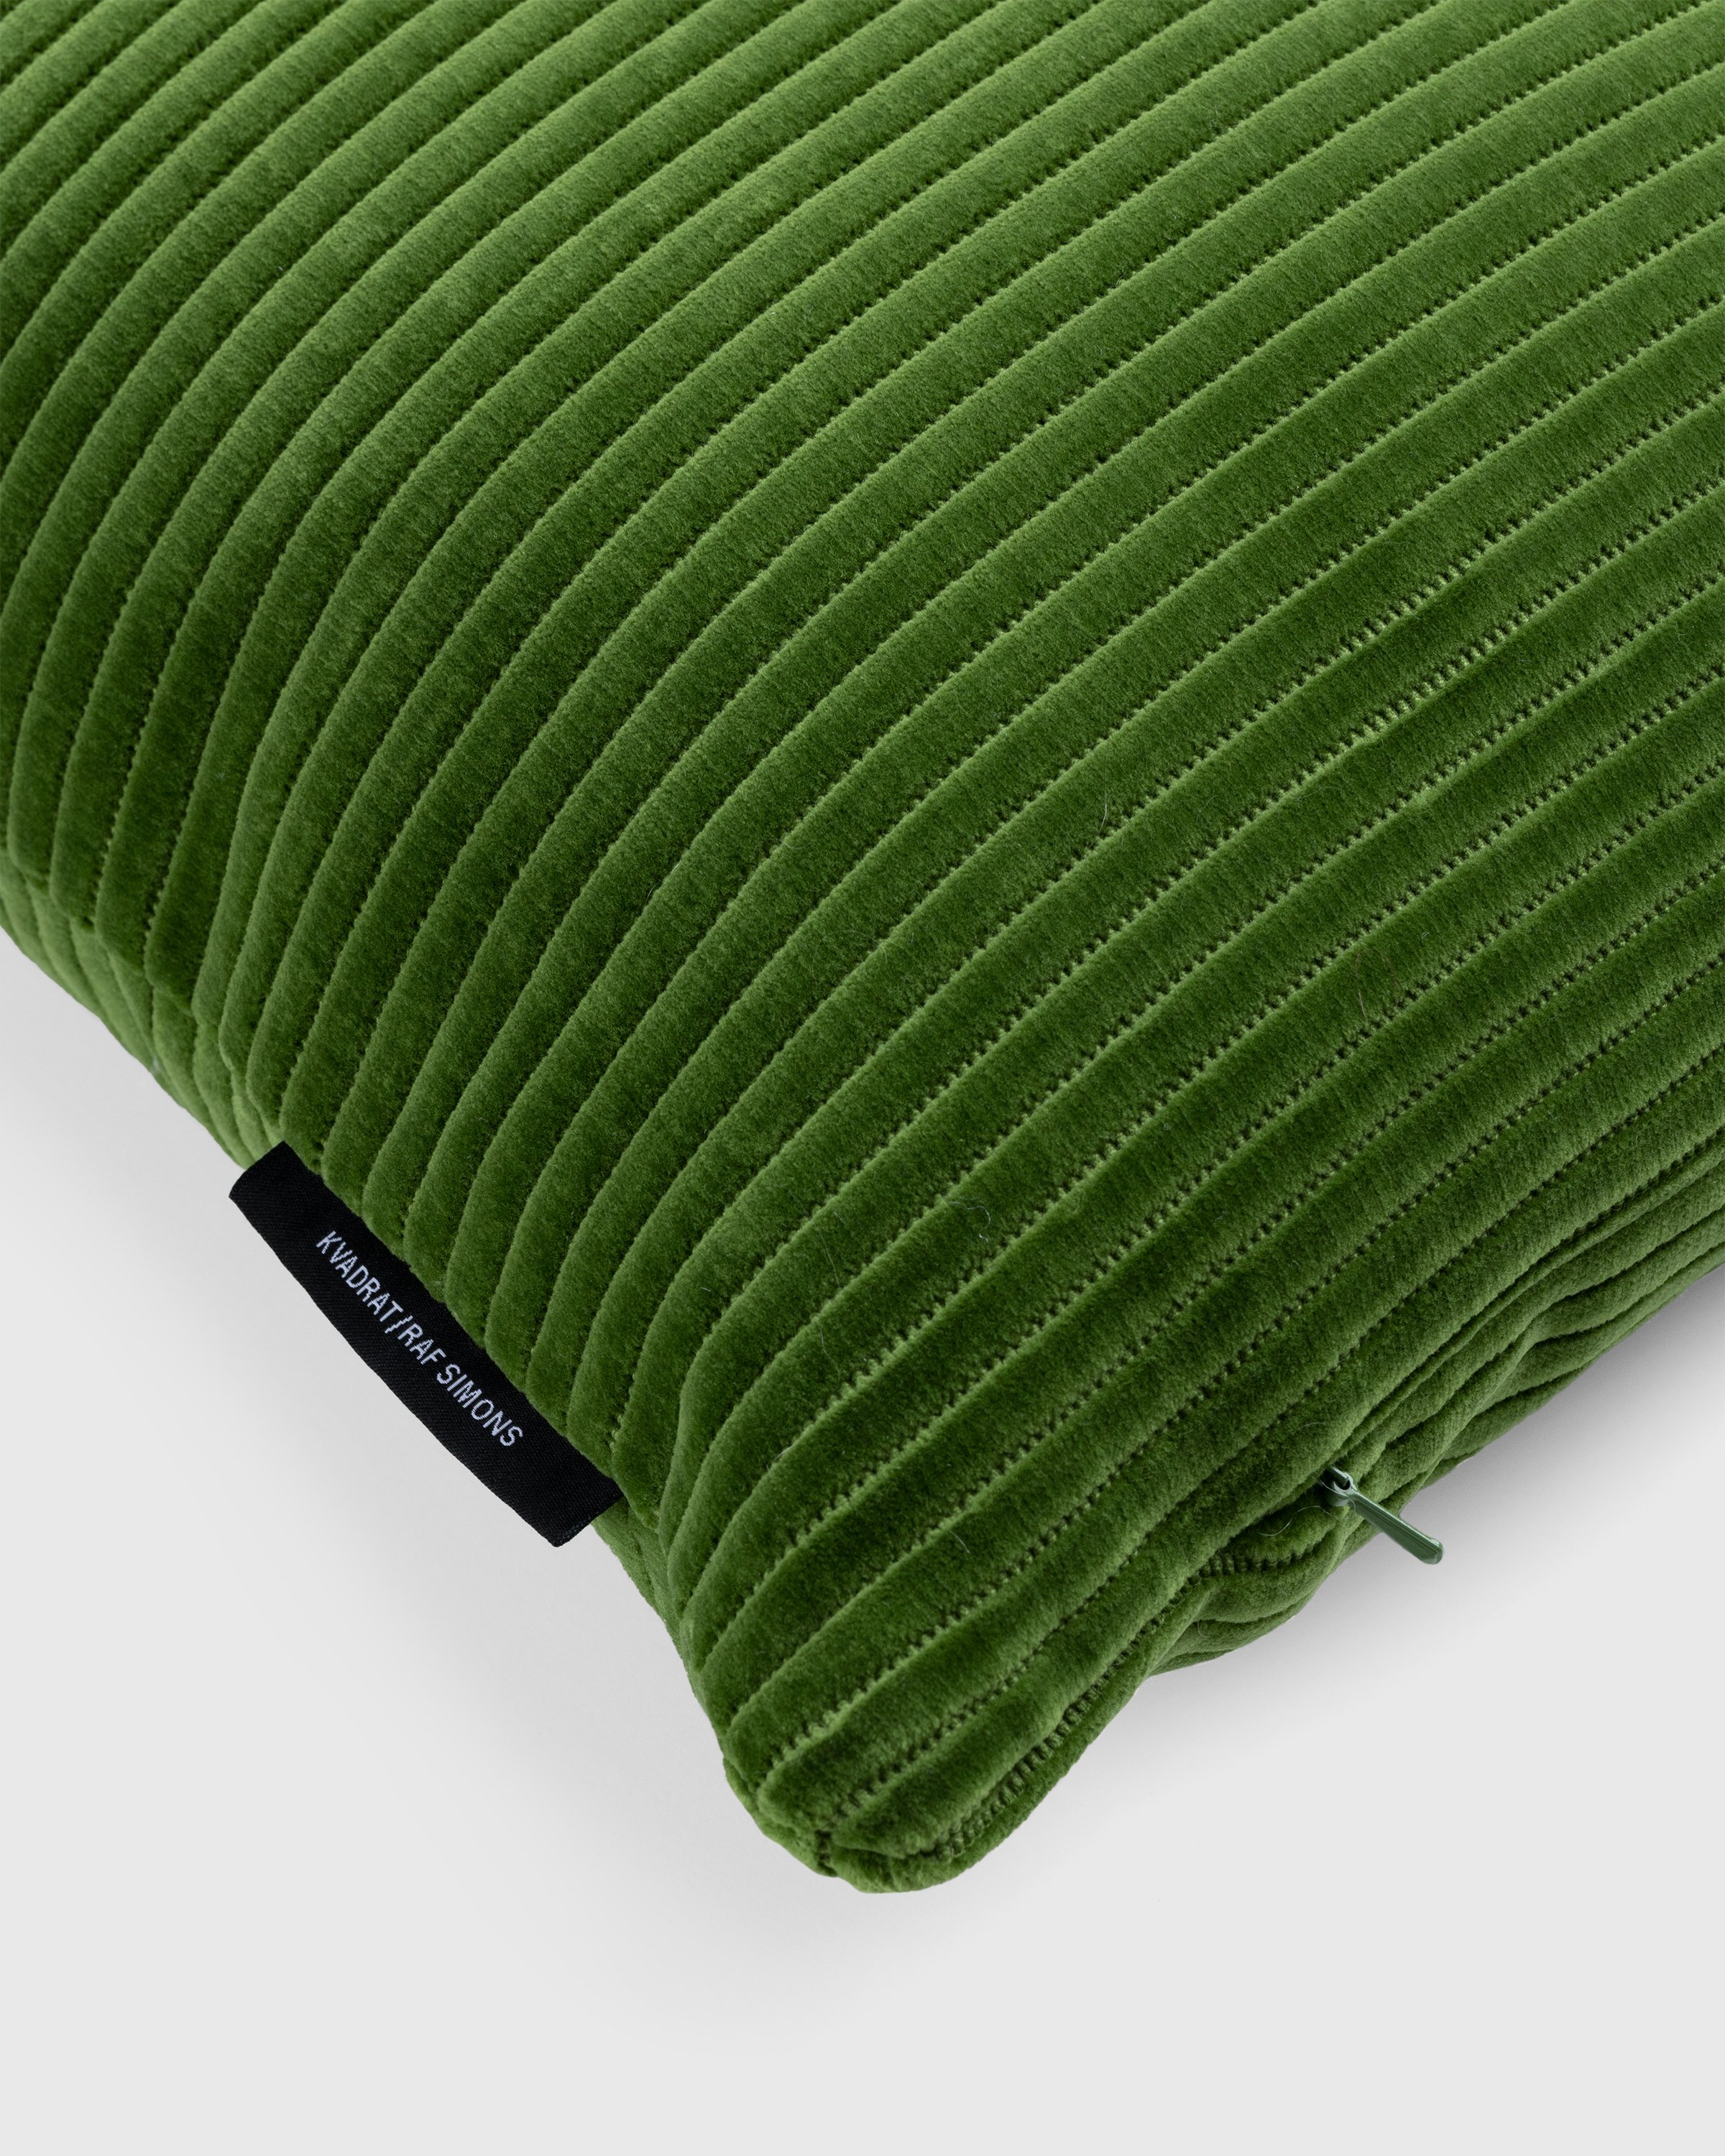 Kvadrat/Raf Simons - Phlox Pillow Green - Lifestyle - Green - Image 2